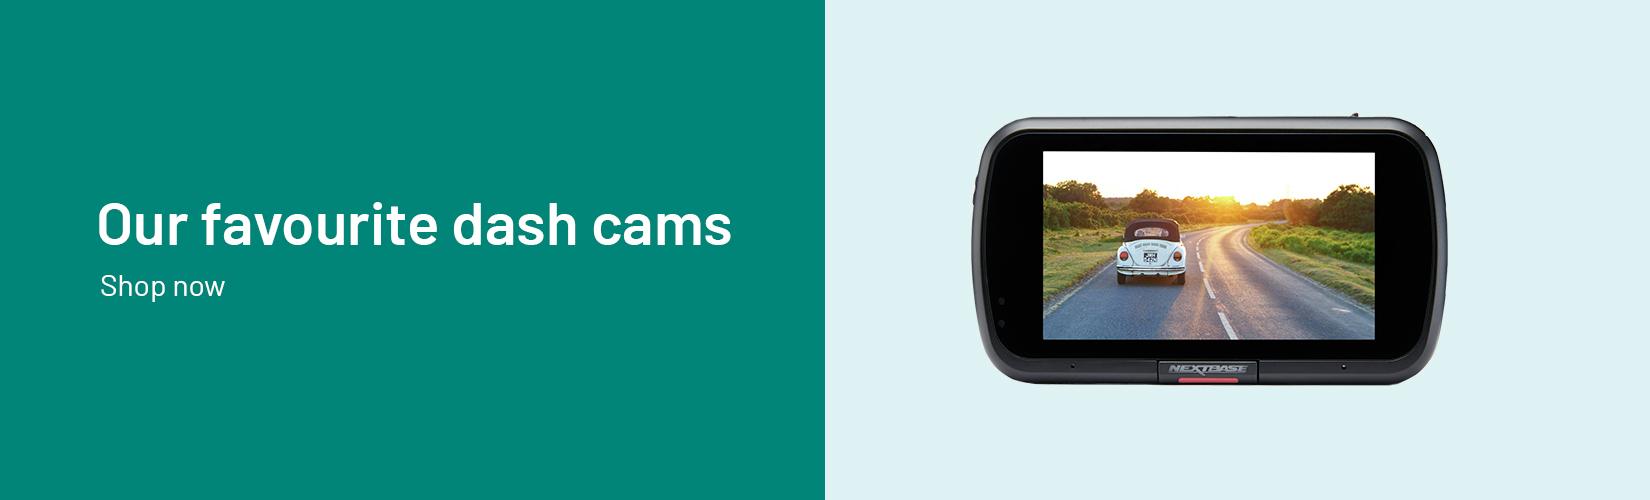 Our favorite dash cams. Shop now. 